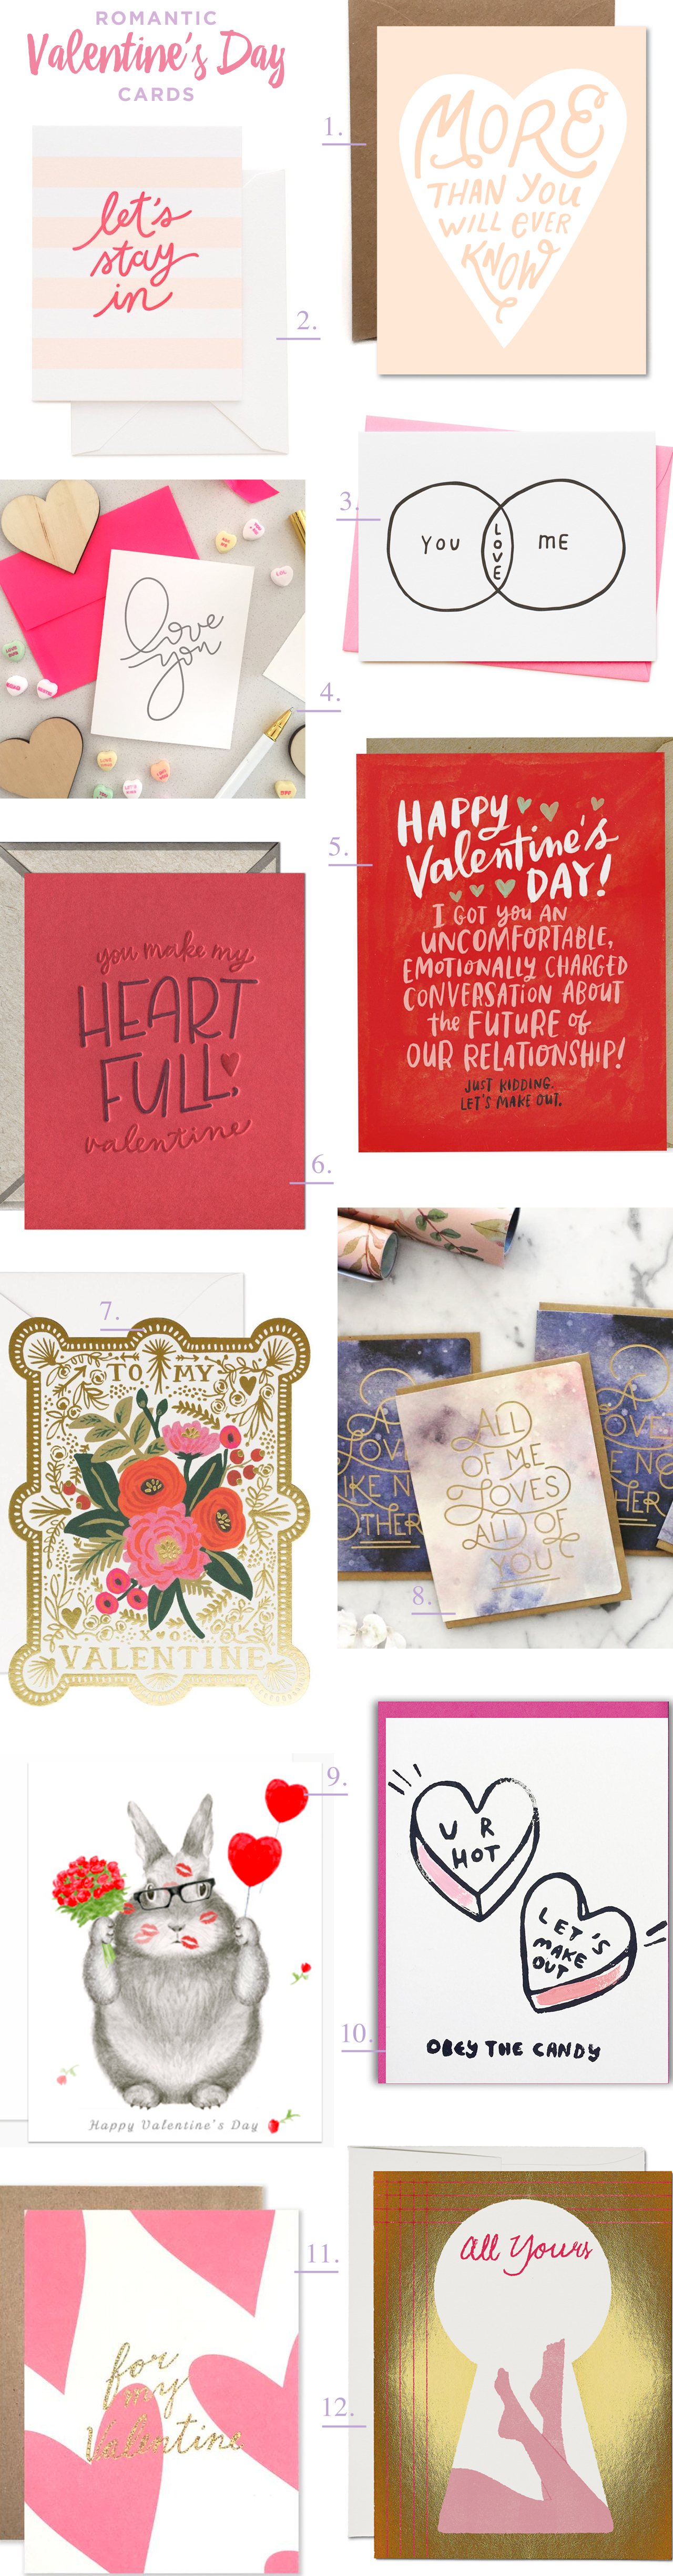 Seasonal Stationery: Romantic Valentine's Day Cards